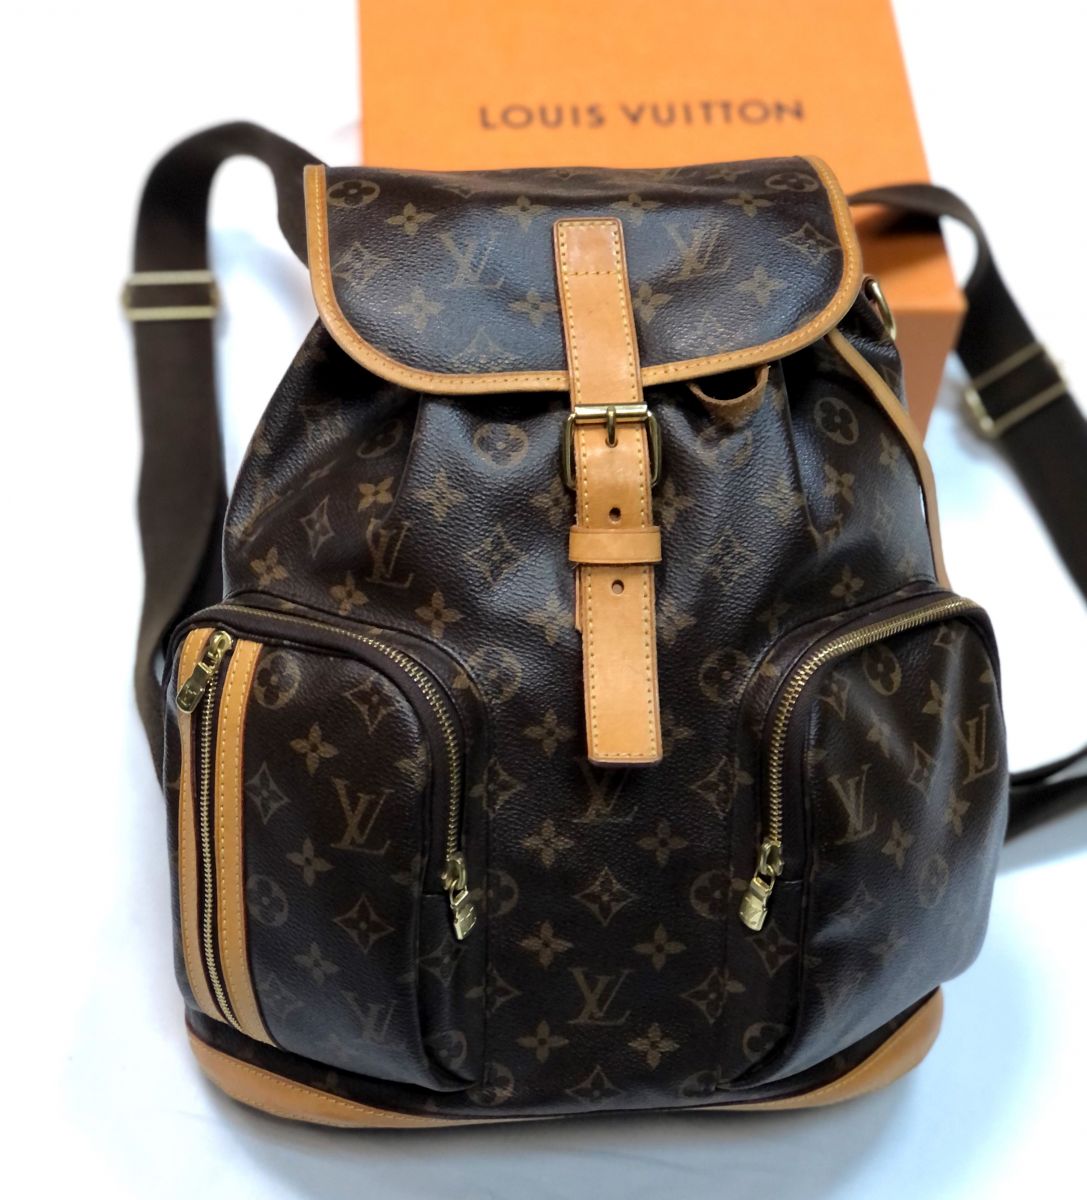 Рюкзак Louis Vuitton размер 25/35 цена 53 848 руб